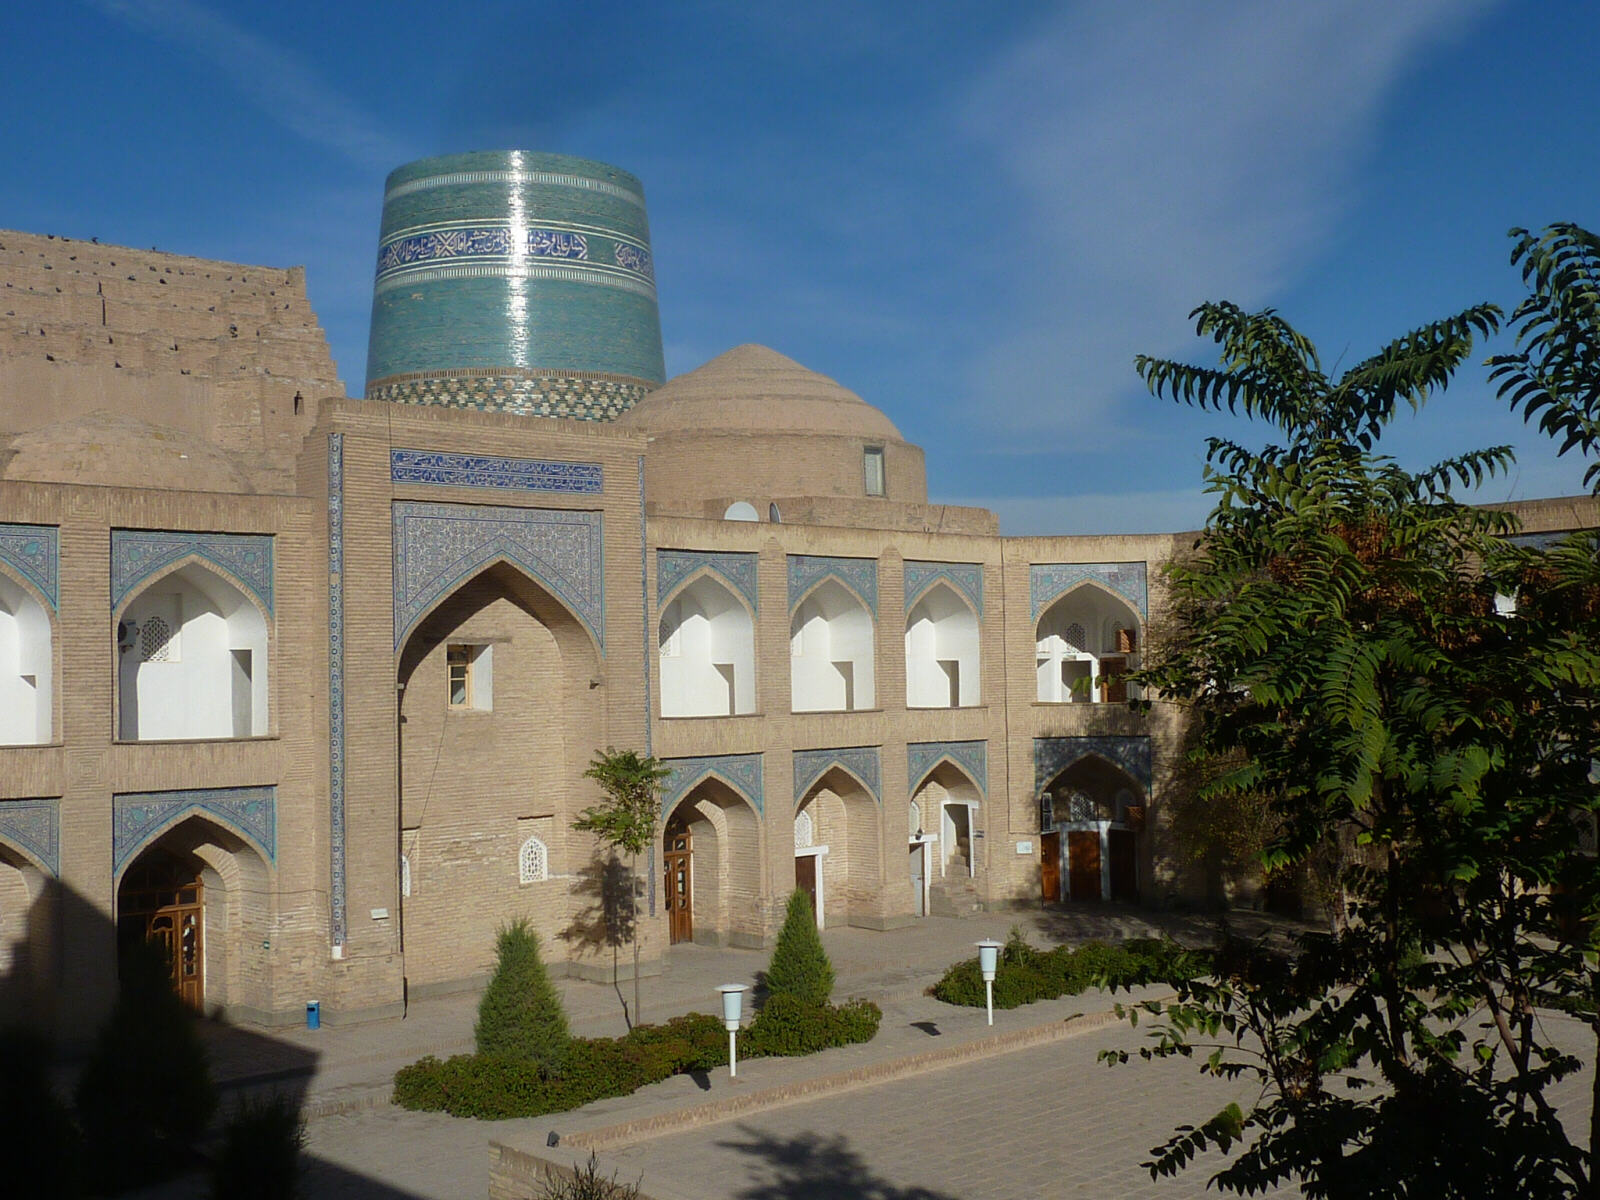 The Orient Star hotel in Khiva, Uzbekistan